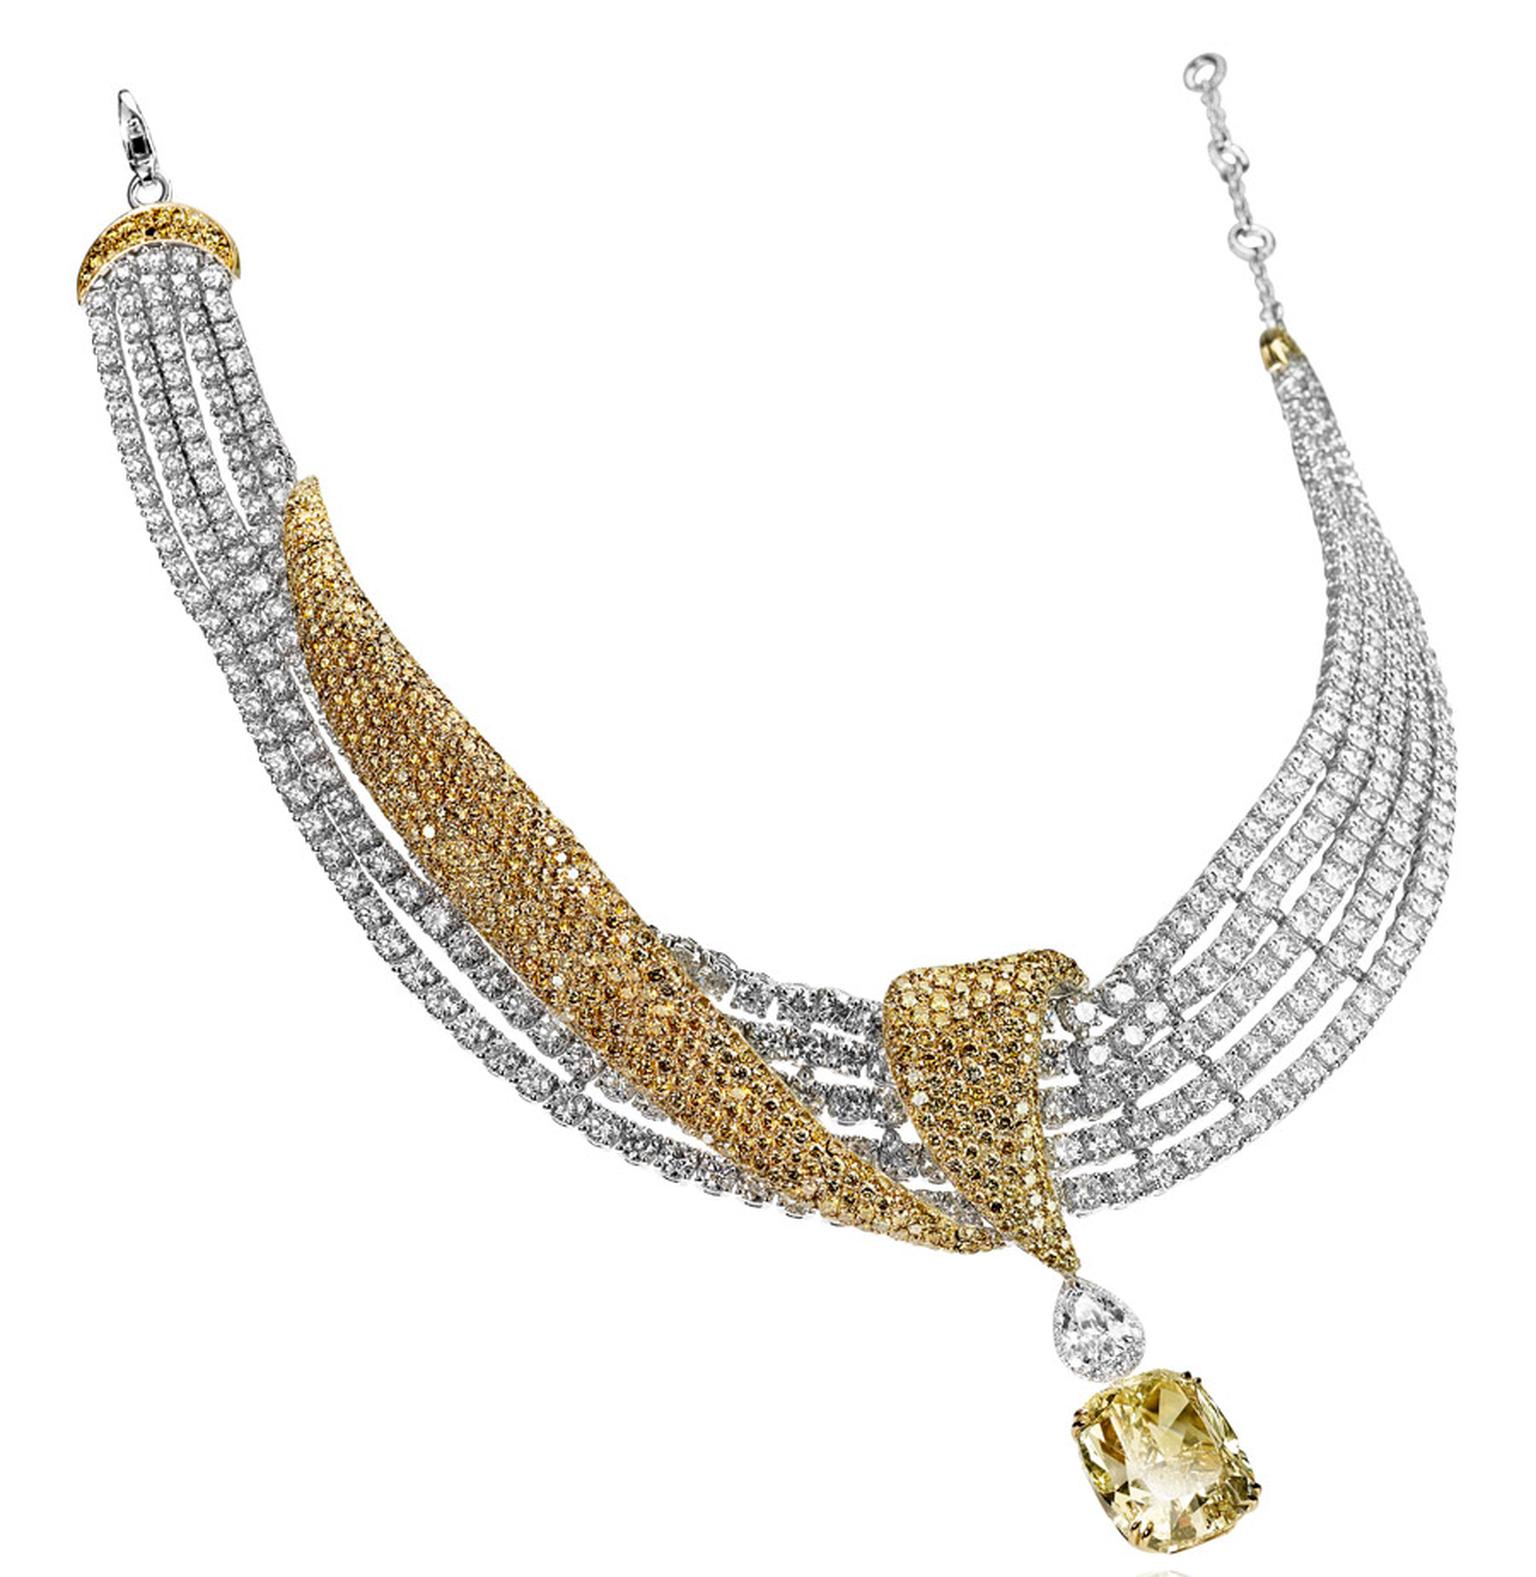 Adler-diamonds-Pendant-in-white-gold-set-with-one-pear-shaped-diamond-and-diamonds._Fancy-Intense-Yellow_-cushion-cut-diamond1BD1.jpg